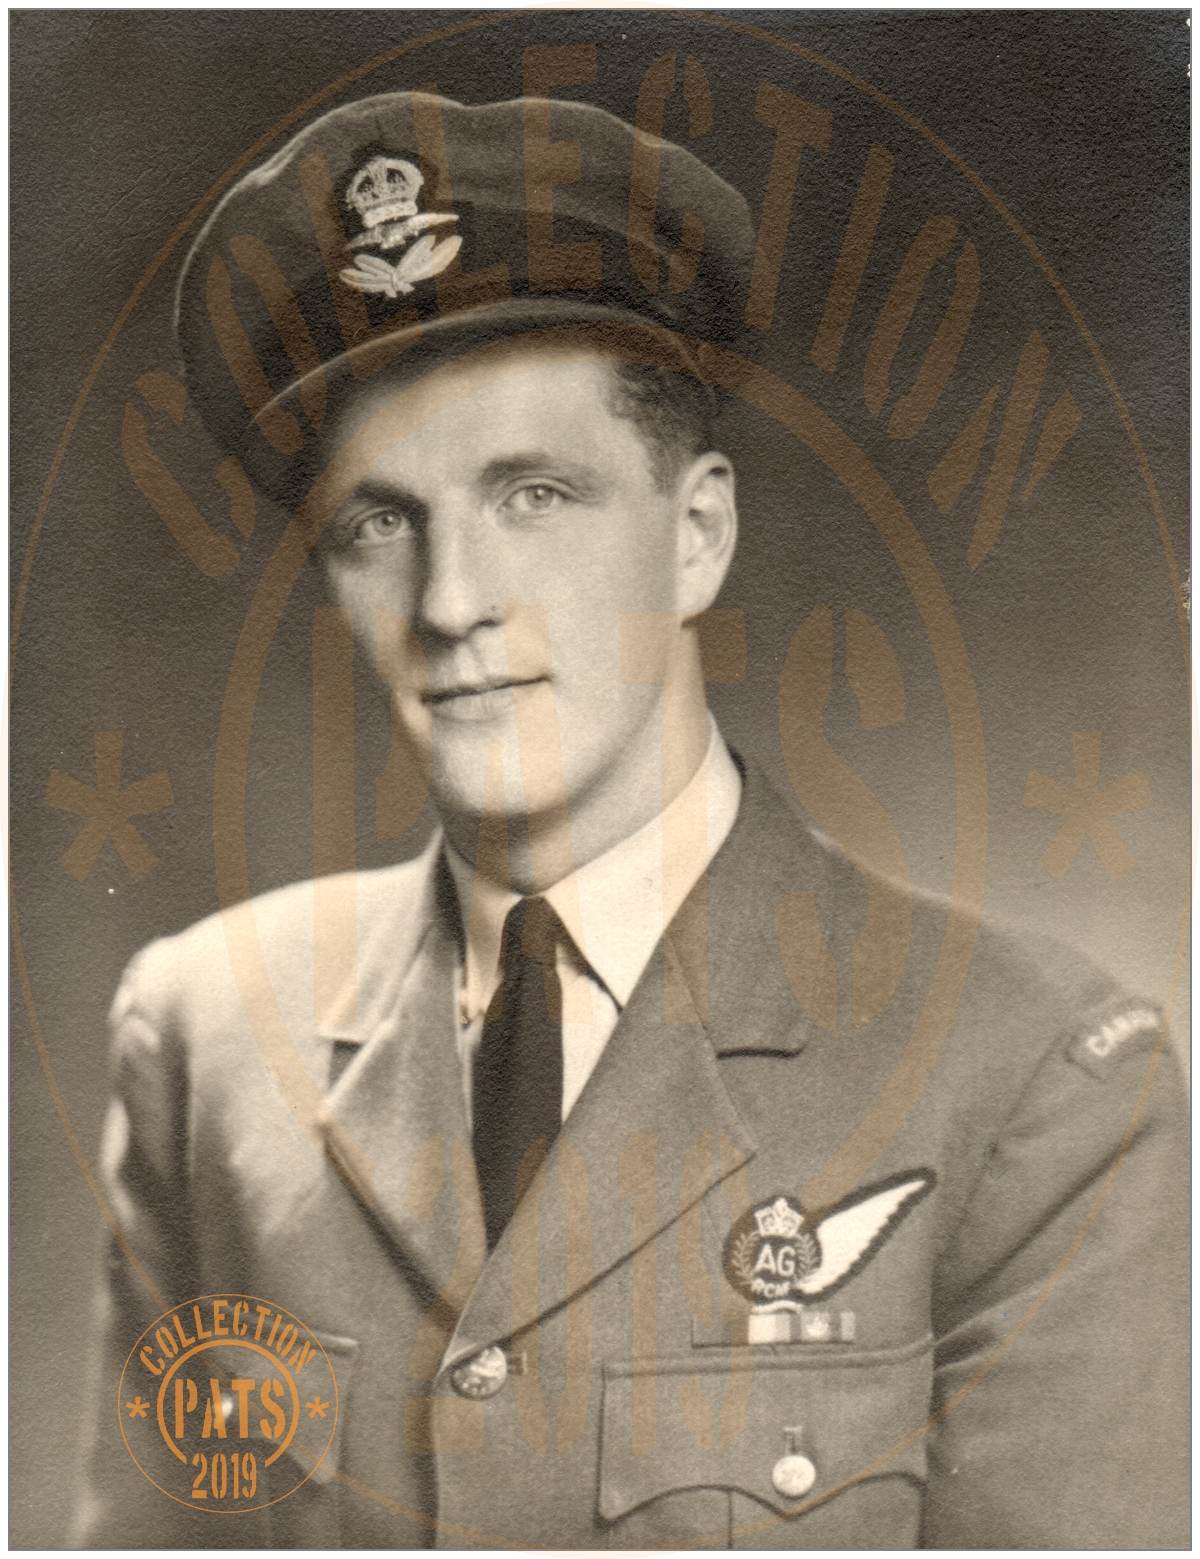 R/156778 - J/96144 - Sgt. - Air Gunner - John Carlyle 'Jake' Cornish - RCAF